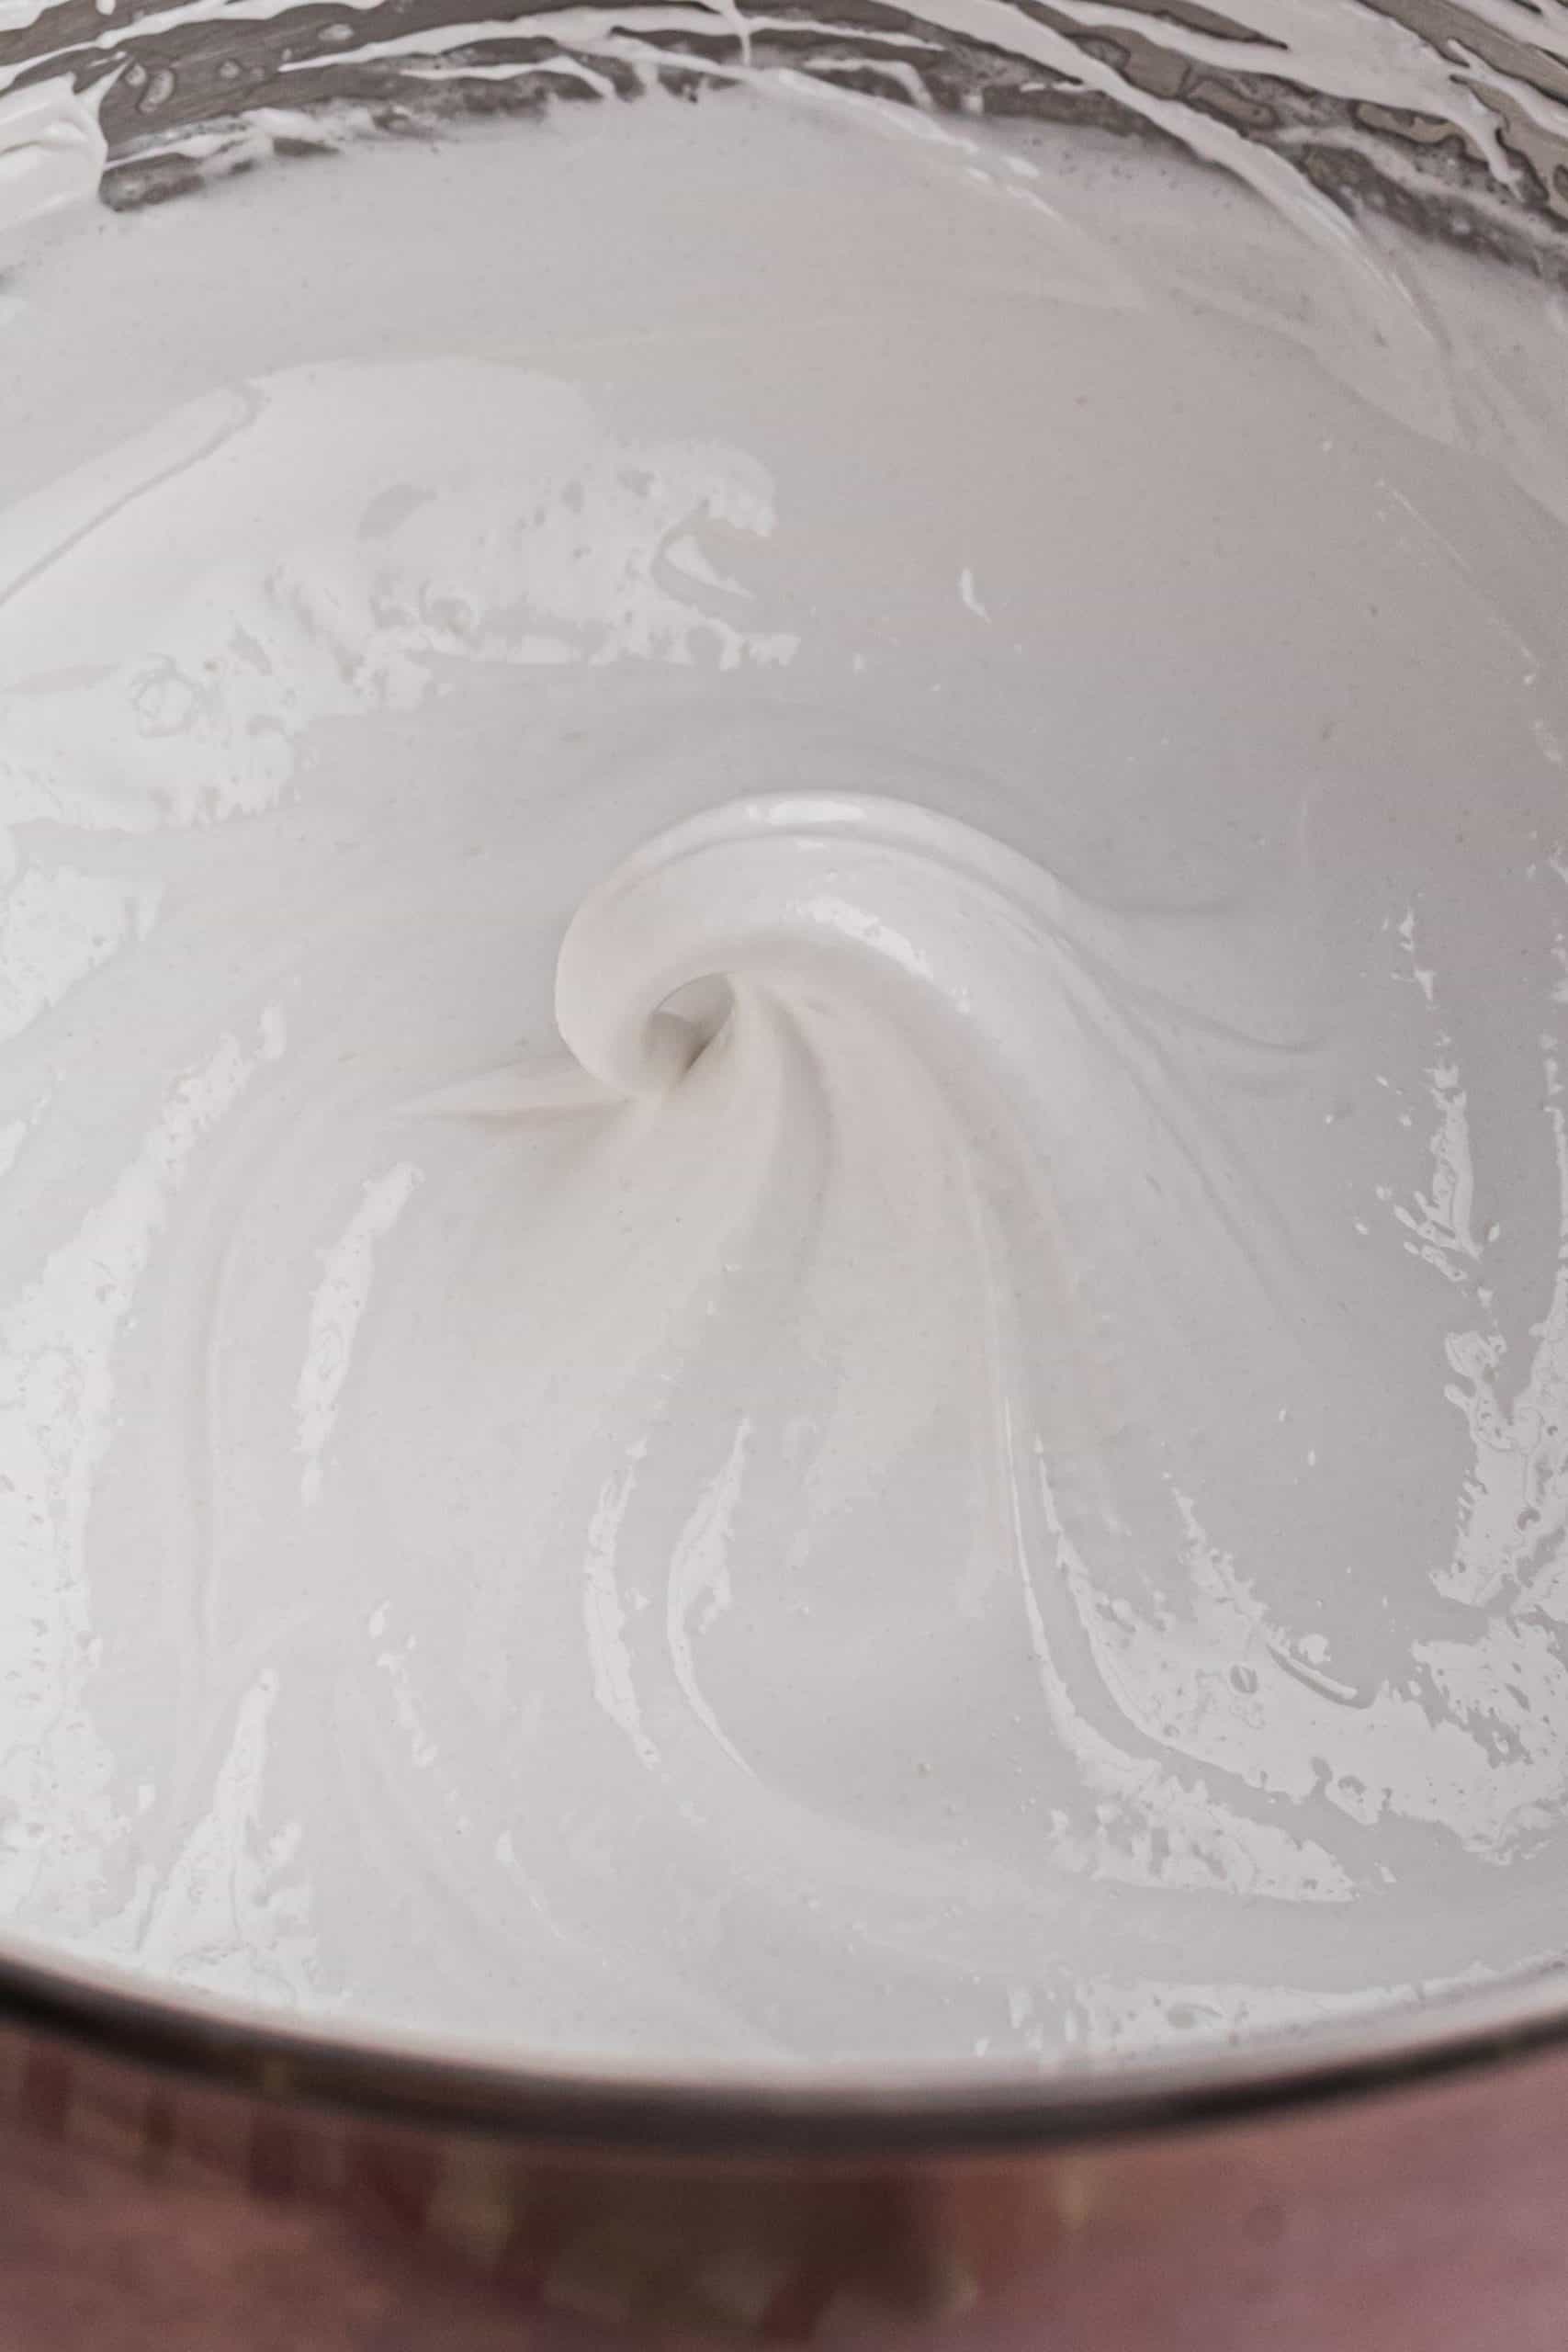 meringue shown inside a mixing bowl.